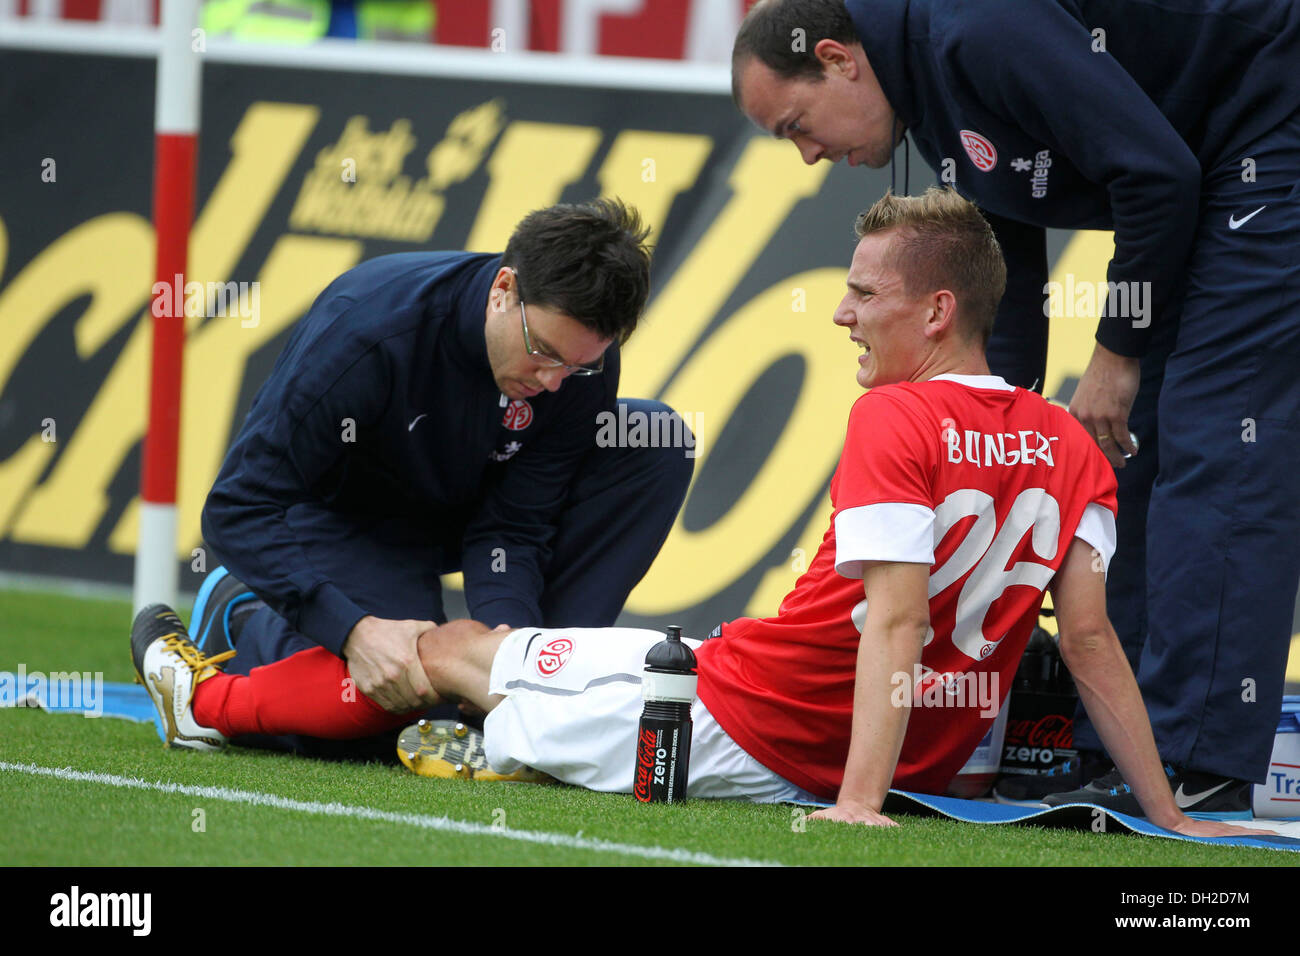 Niko Bungert, player of FSV Mainz 05 is being treated on the sideline, FSV Mainz 05 vs Fortuna Duesseldorf, Coface-Arena, Mainz Stock Photo